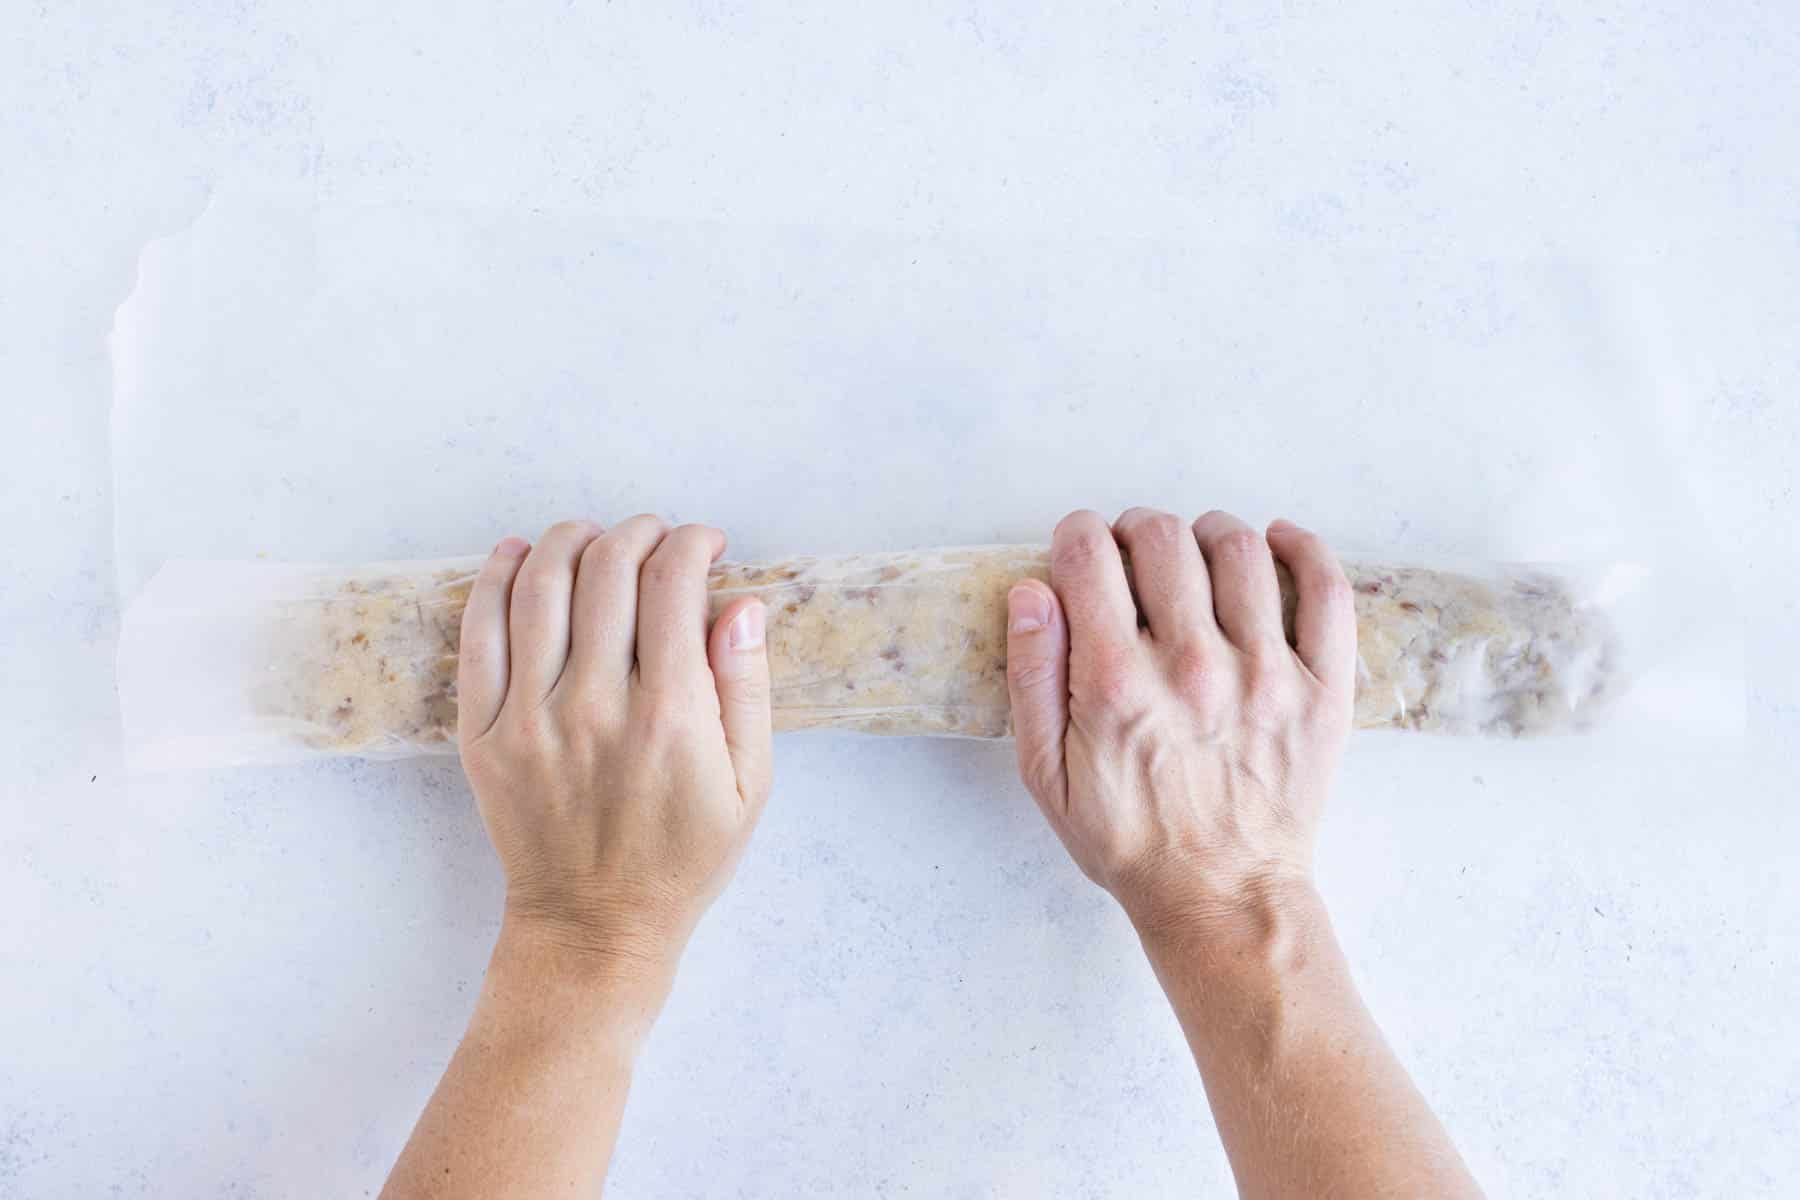 Hands shape cookie dough into a log.